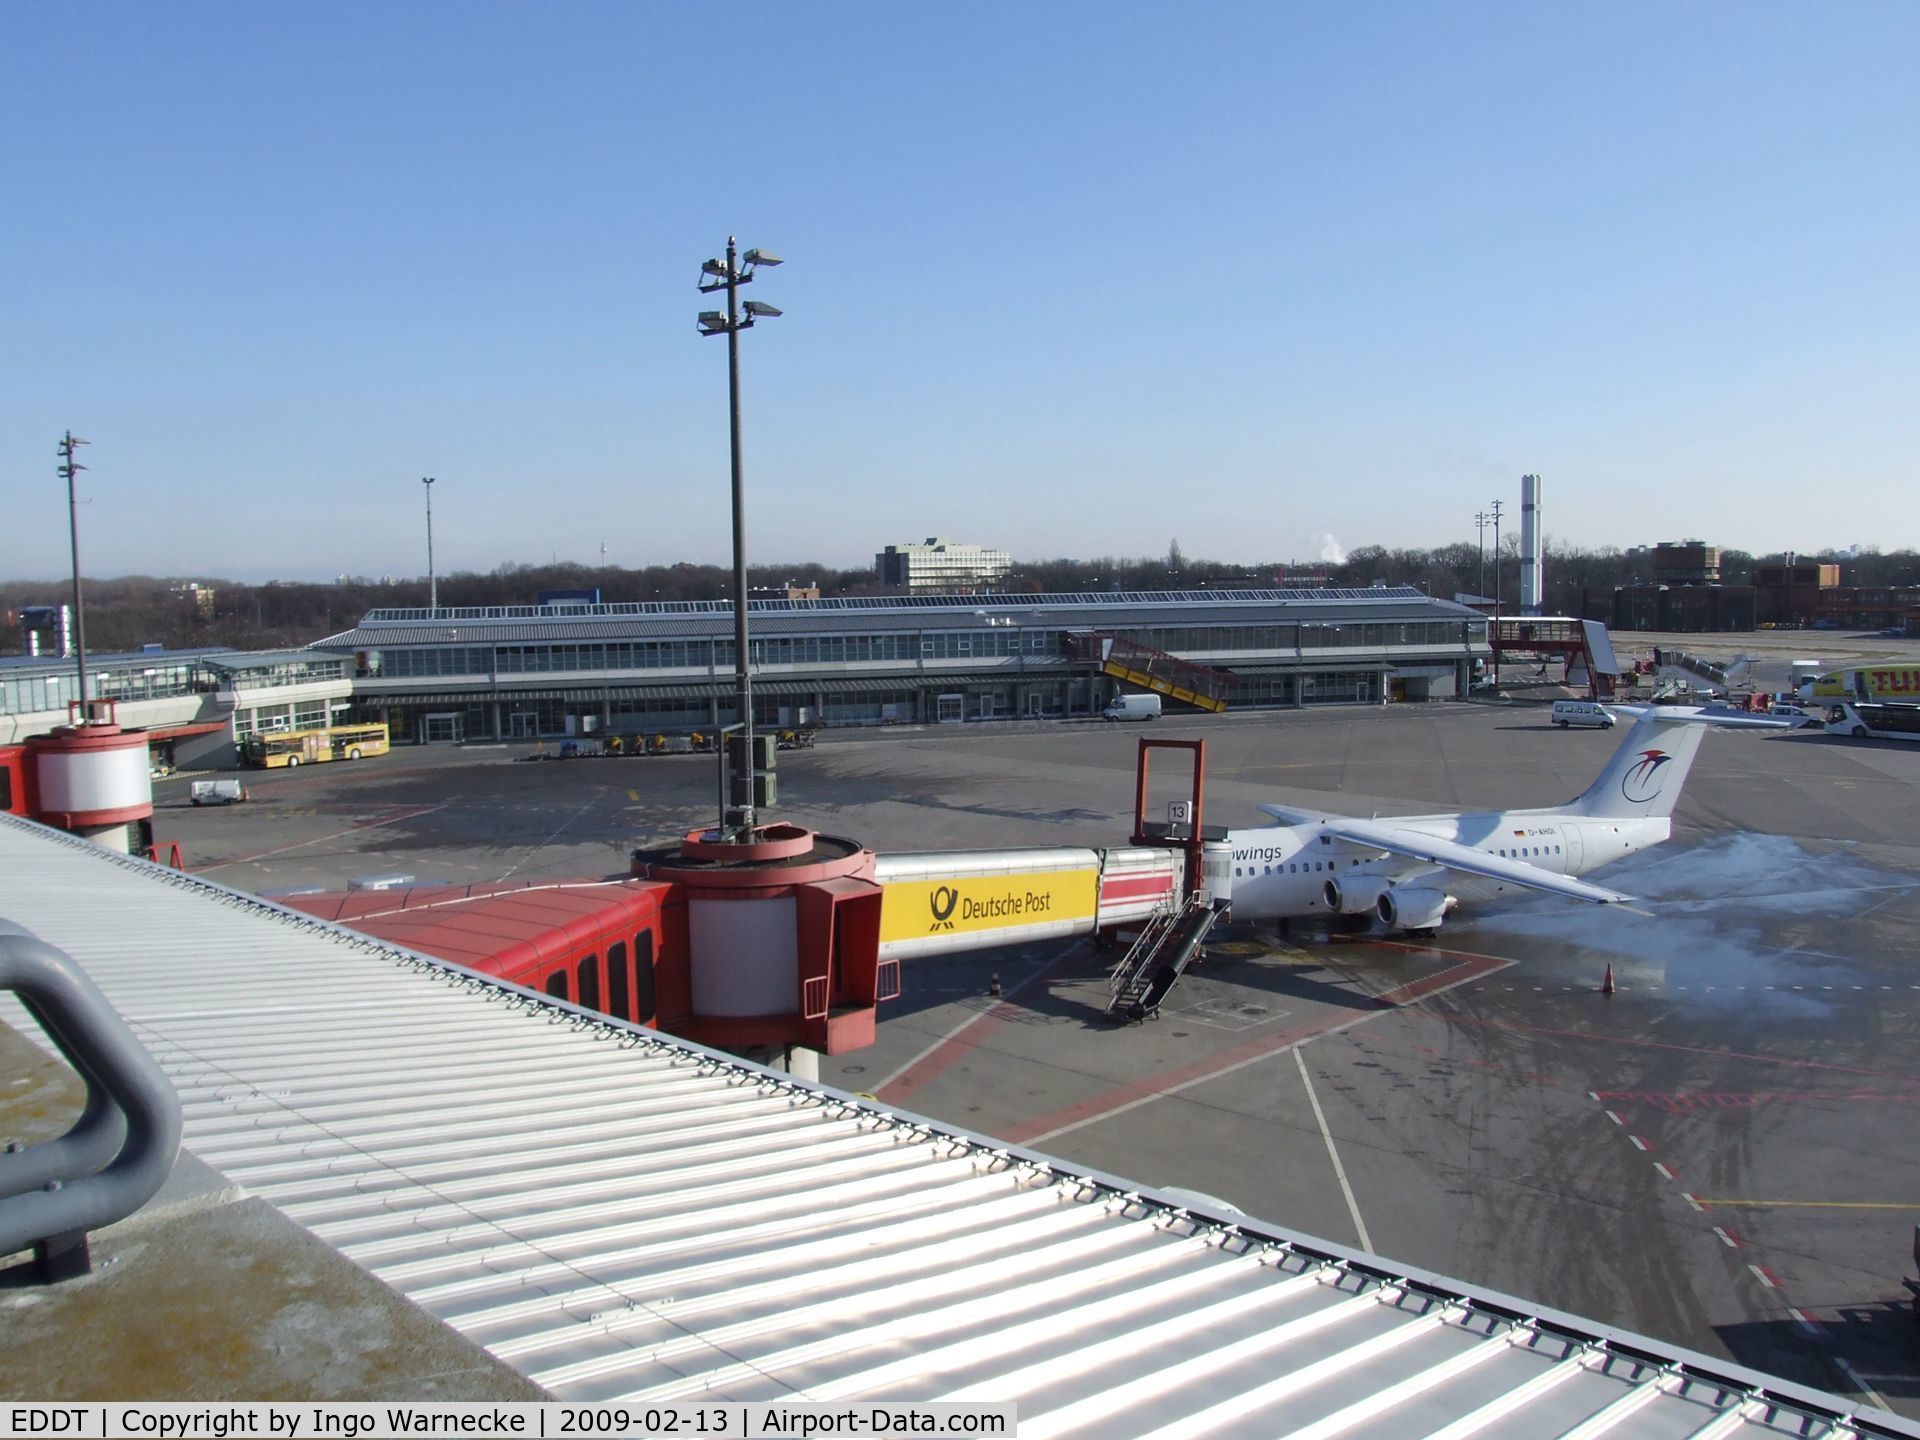 Tegel International Airport (closing in 2011), Berlin Germany (EDDT) - Berlin Tegel, the western terminal extension building